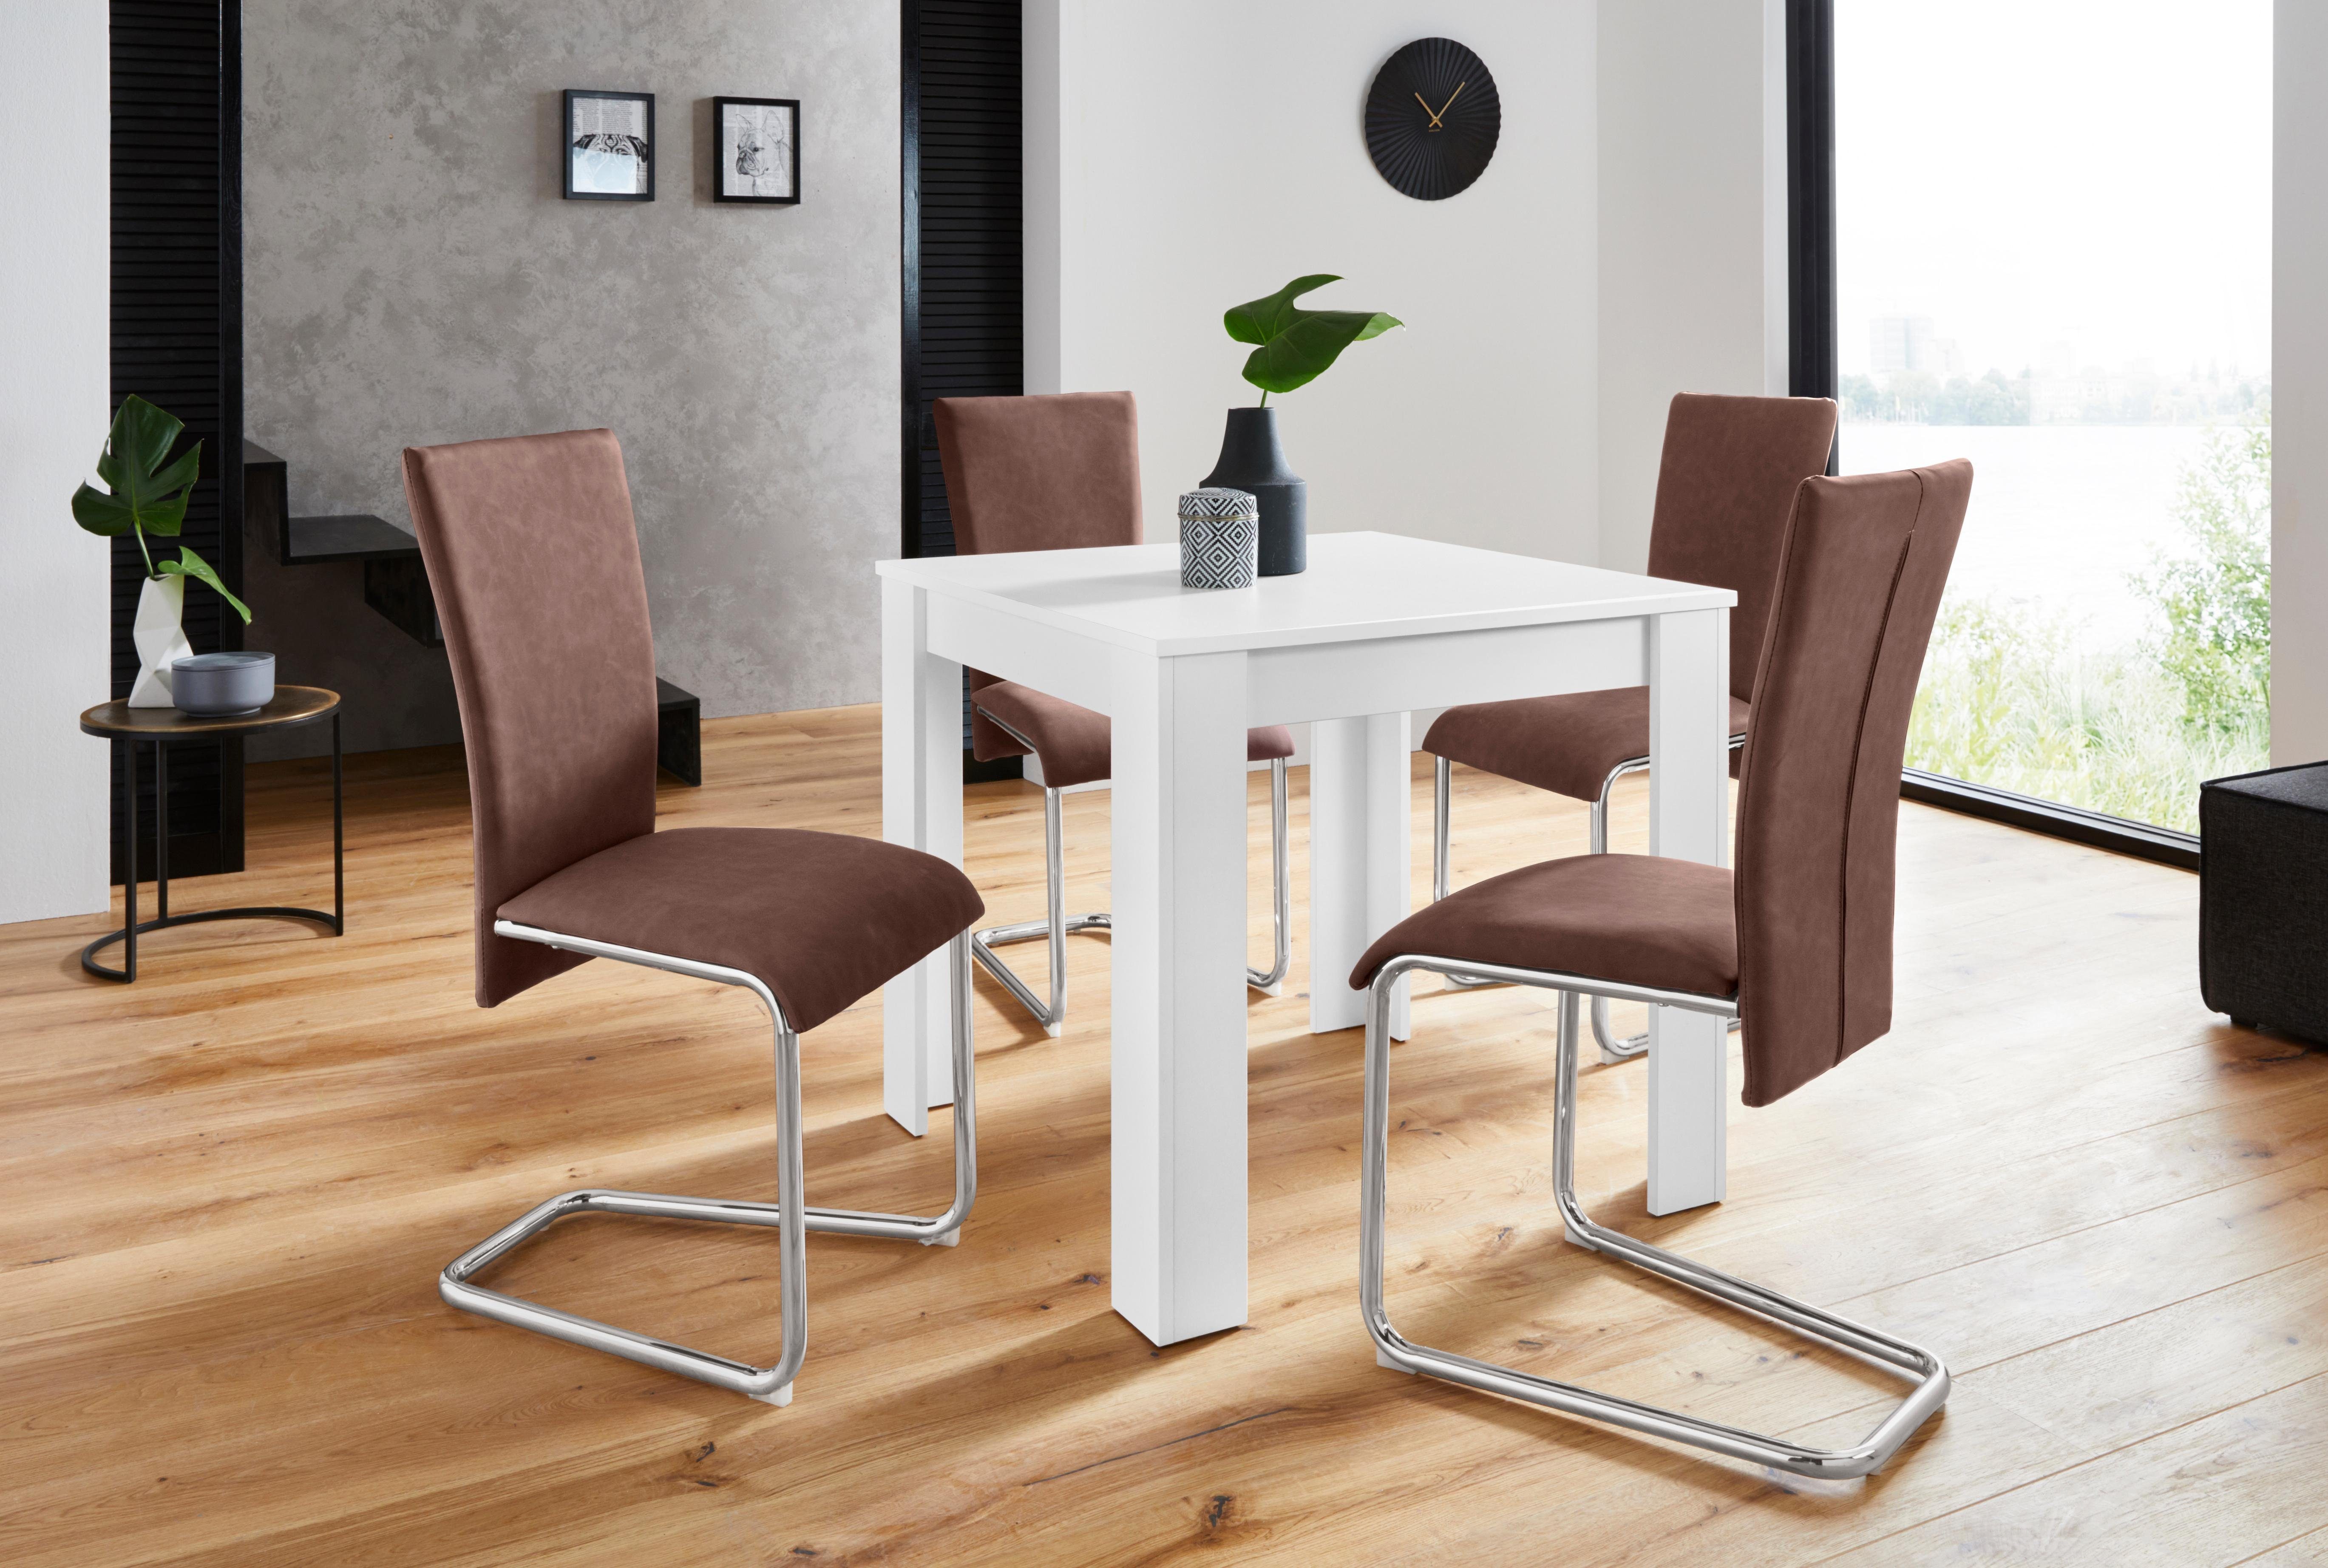 Homexperts Eethoek Nick1-Mulan met 4 stoelen, tafel in wit, breedte 80 cm (set, 5-delig)